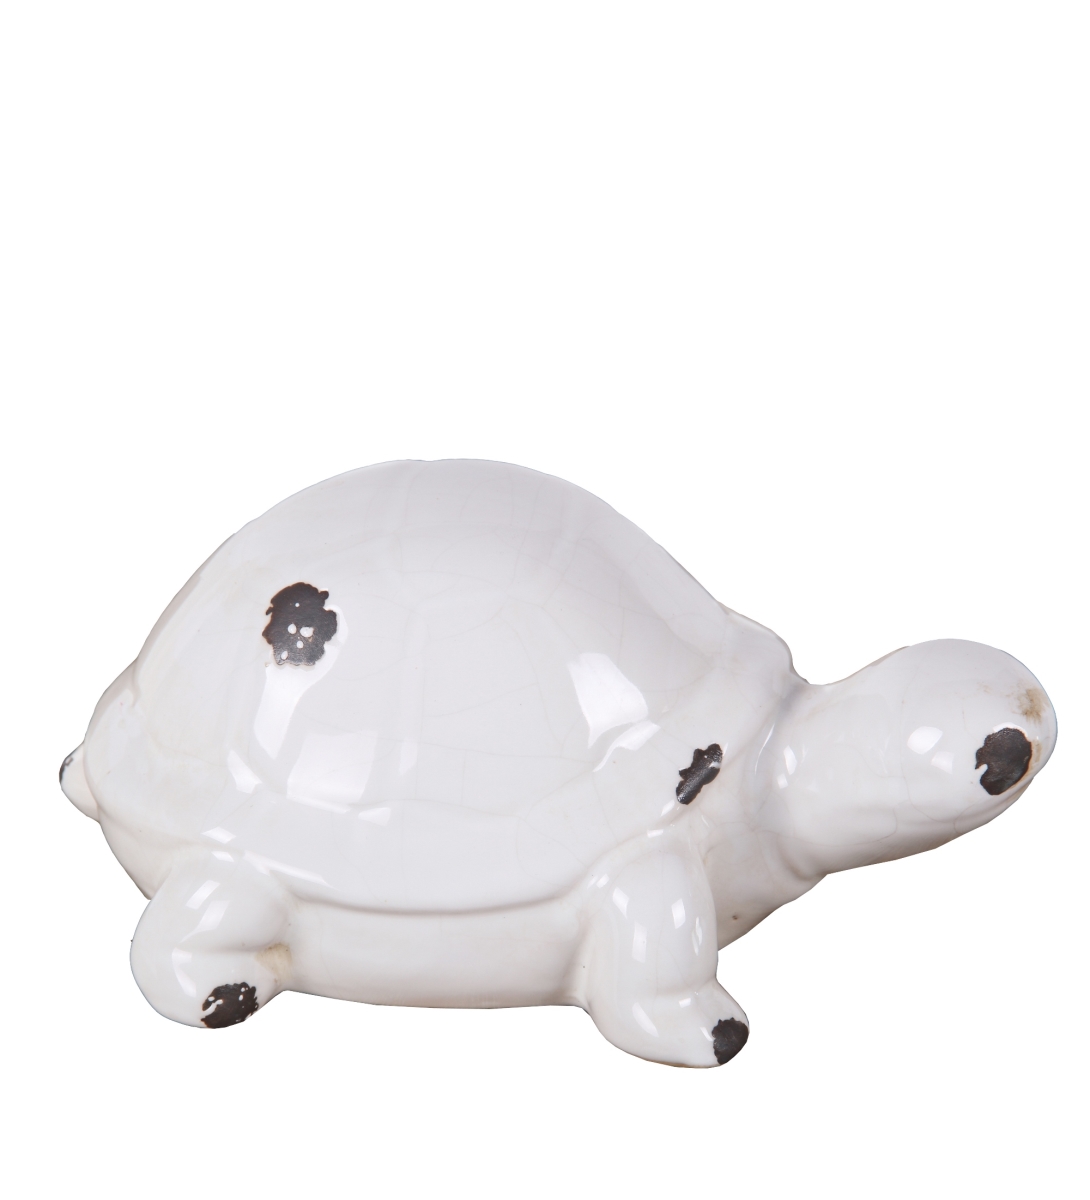 007-00021 9 X 6 X 4 In. Traditional Ceramic Turtle, Antique White